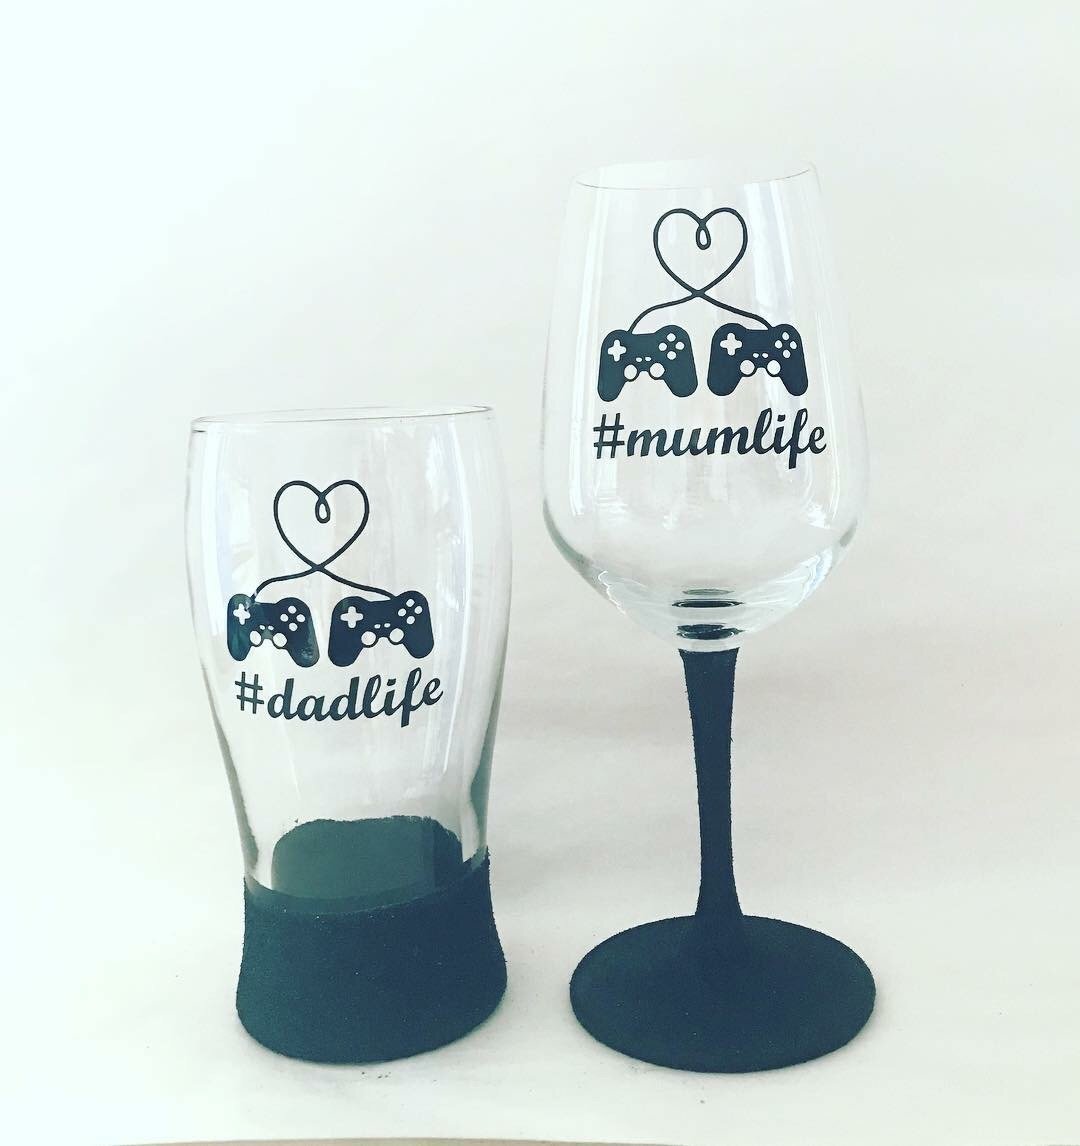 Mumlife and Dadlife glass set